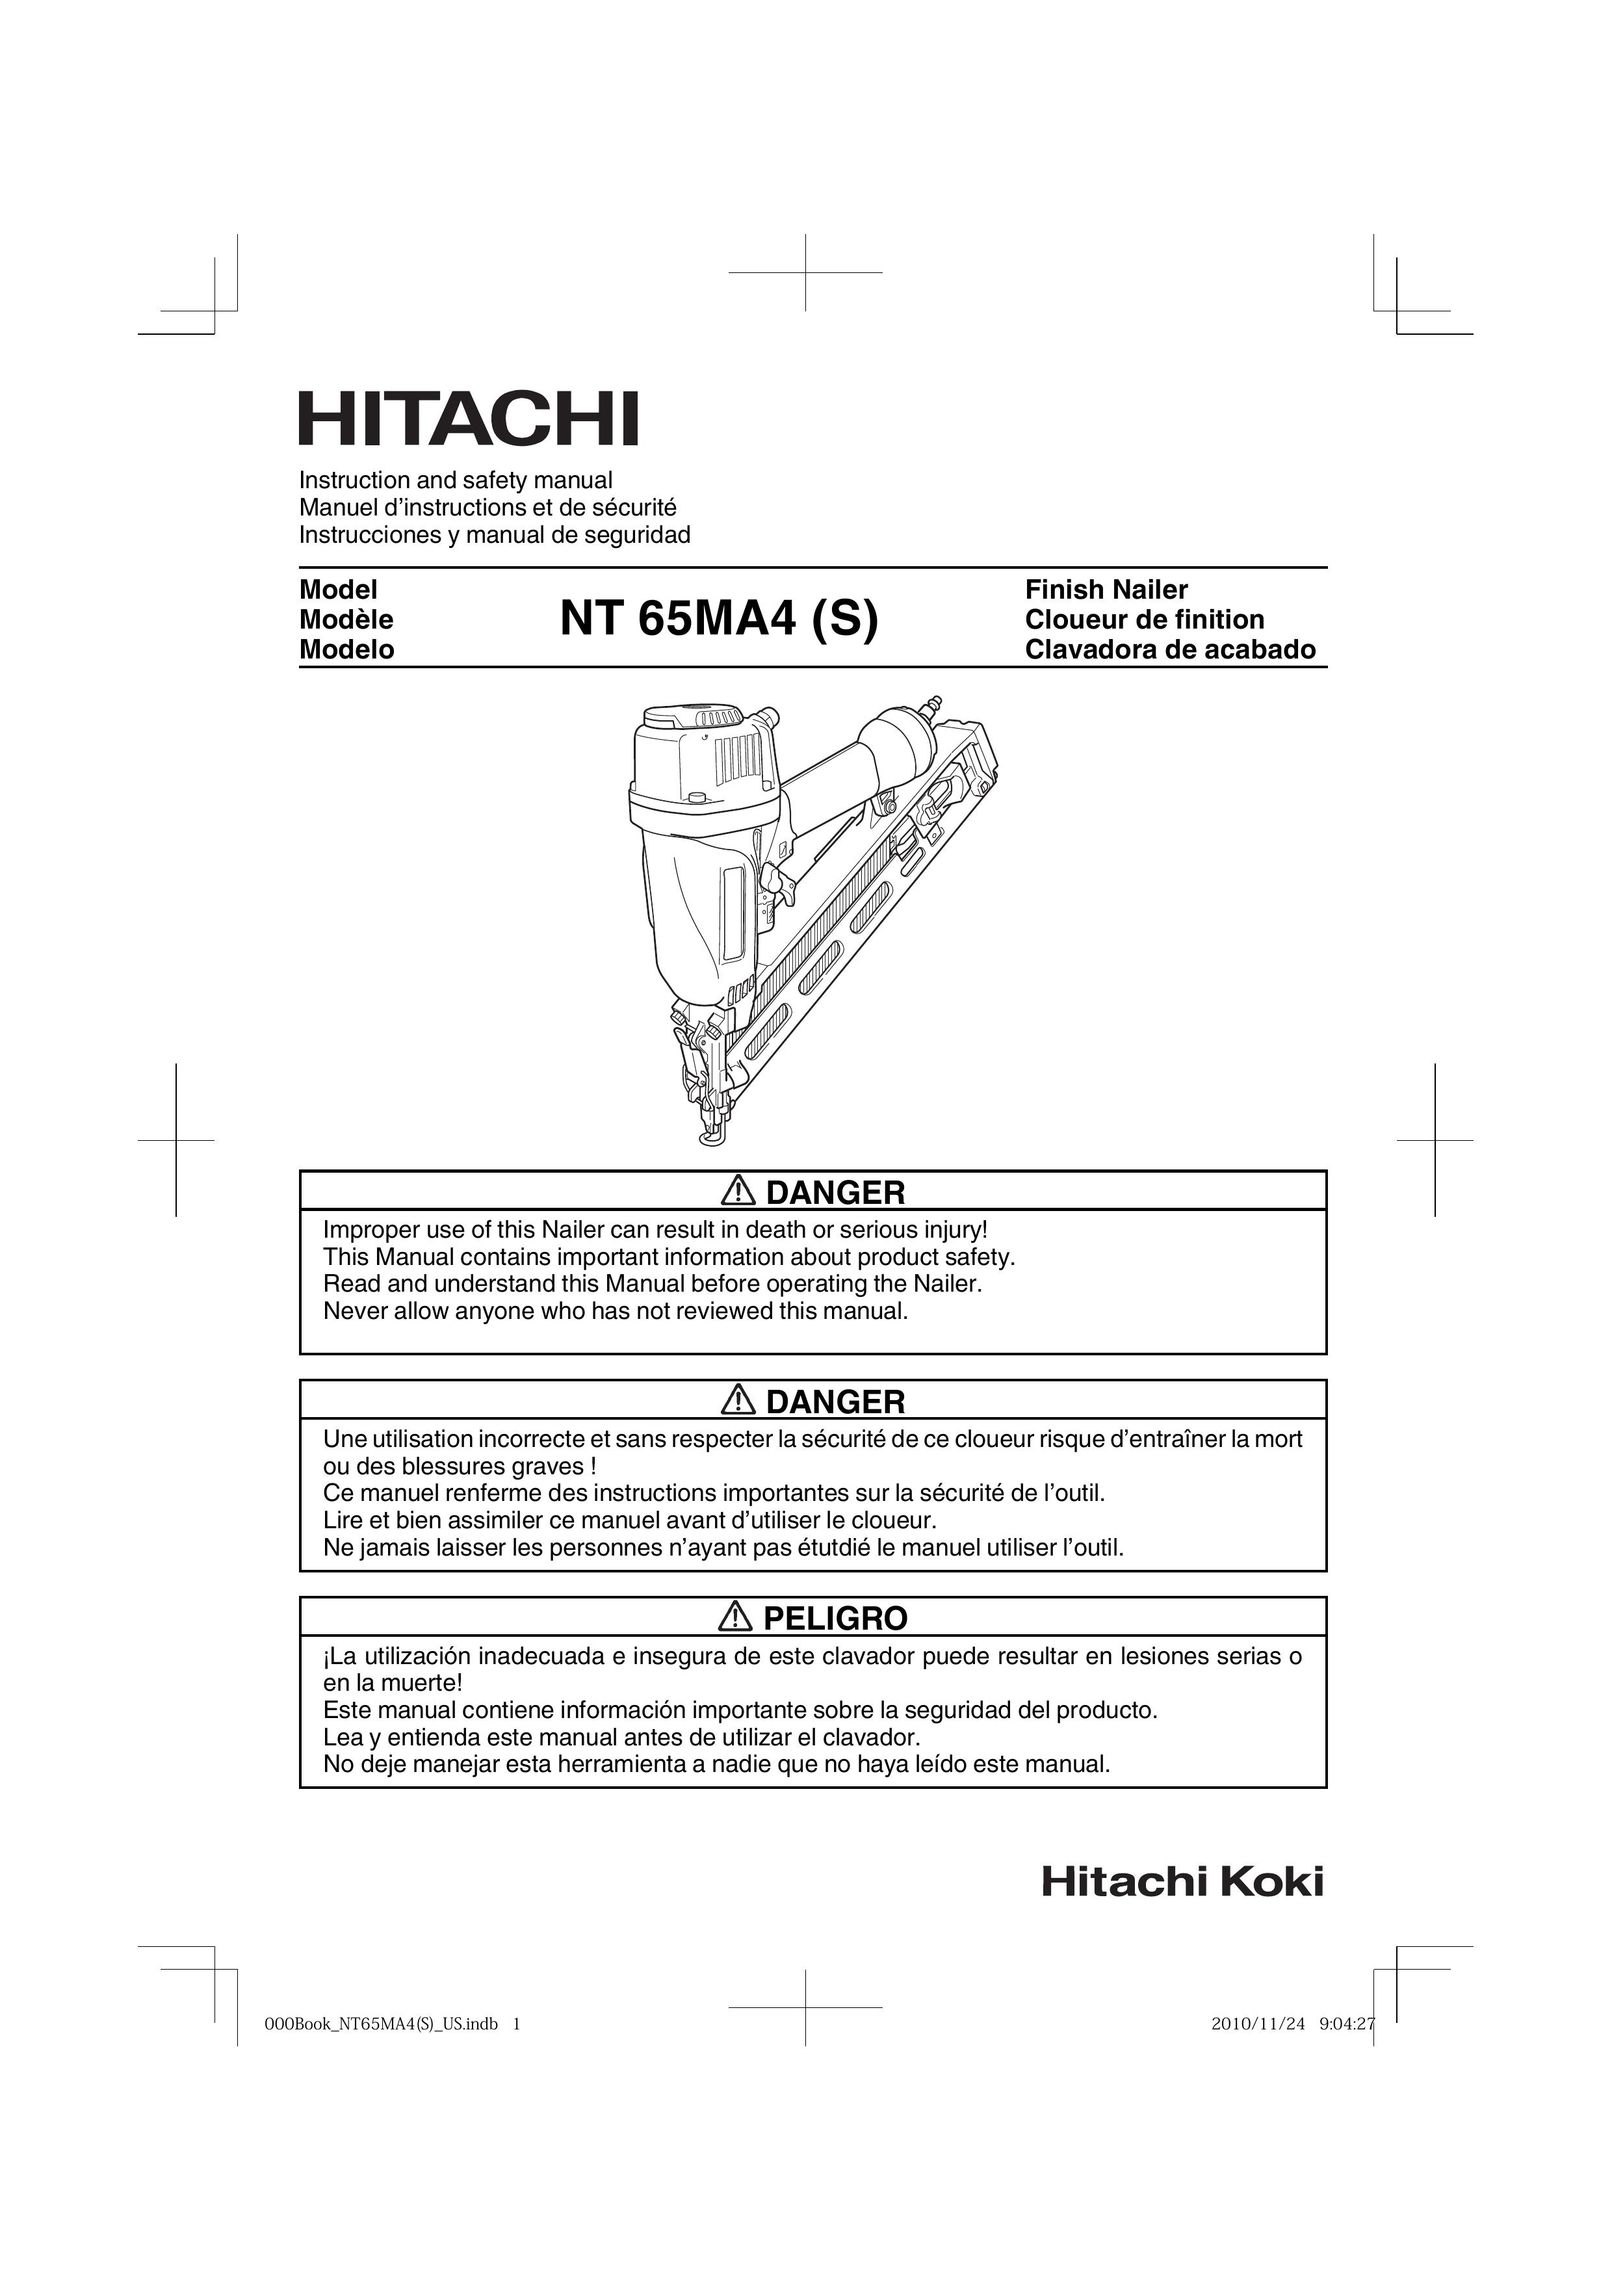 Hitachi NT 65MA4 (S) Nail Gun User Manual